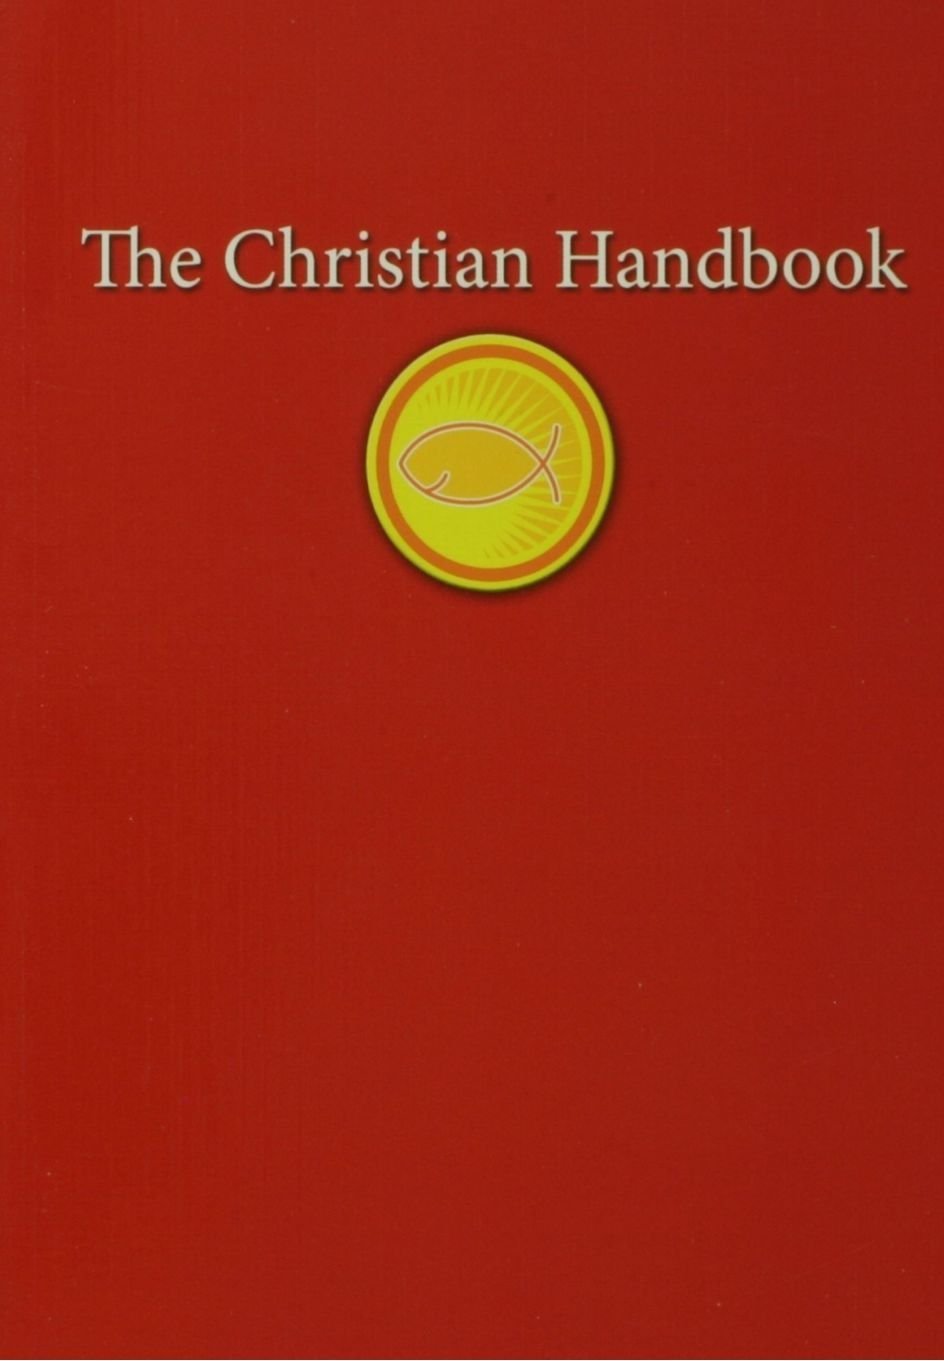 Augsburg Books The Christian Handbook